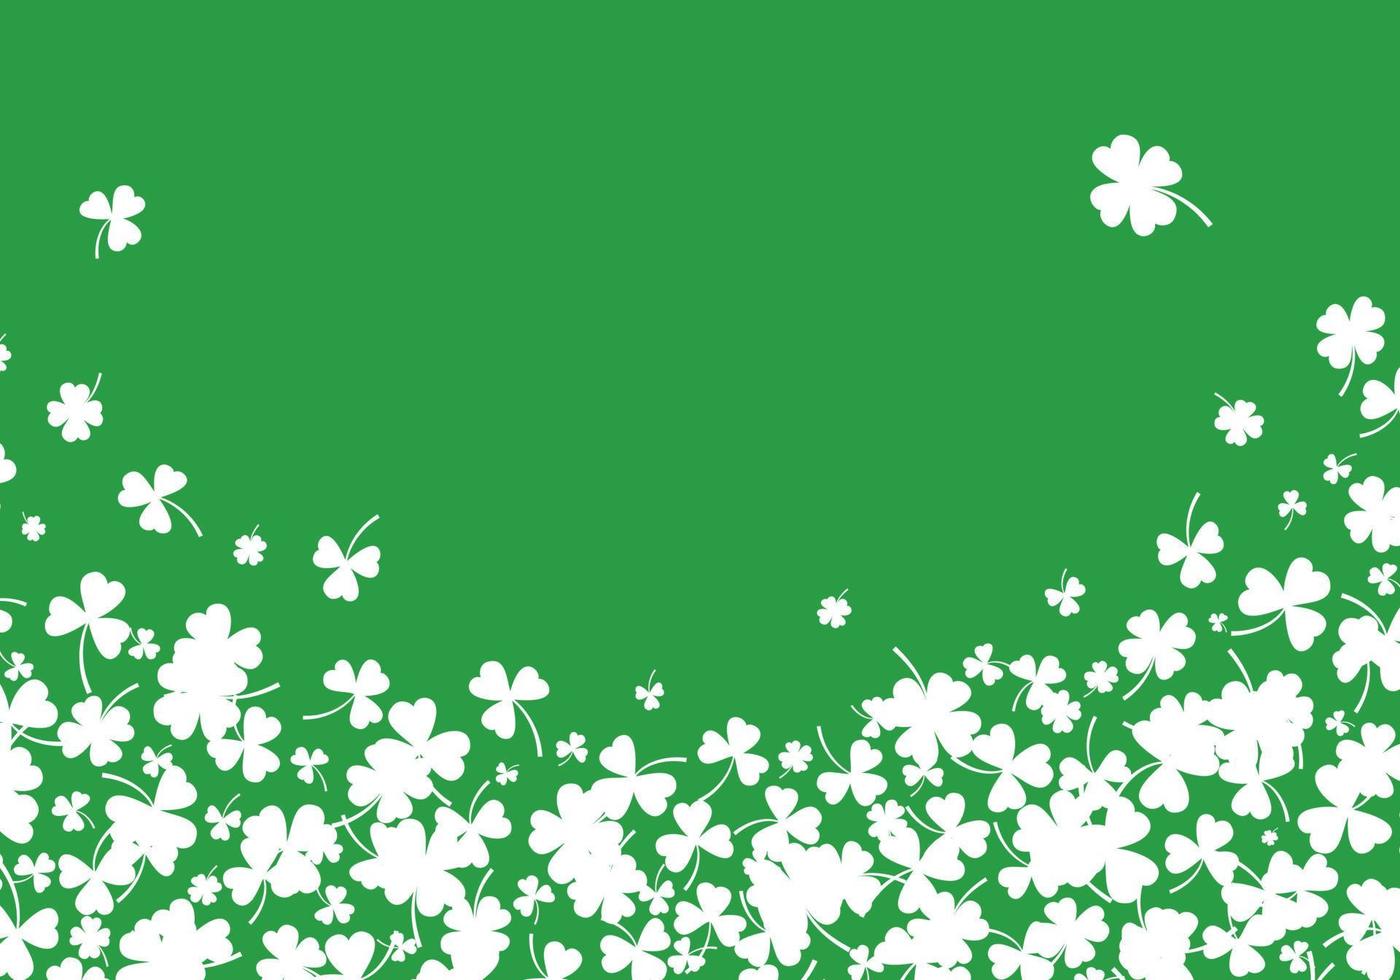 Shamrock or white clover leaves pattern background flat design vector illustration isolated on green background.